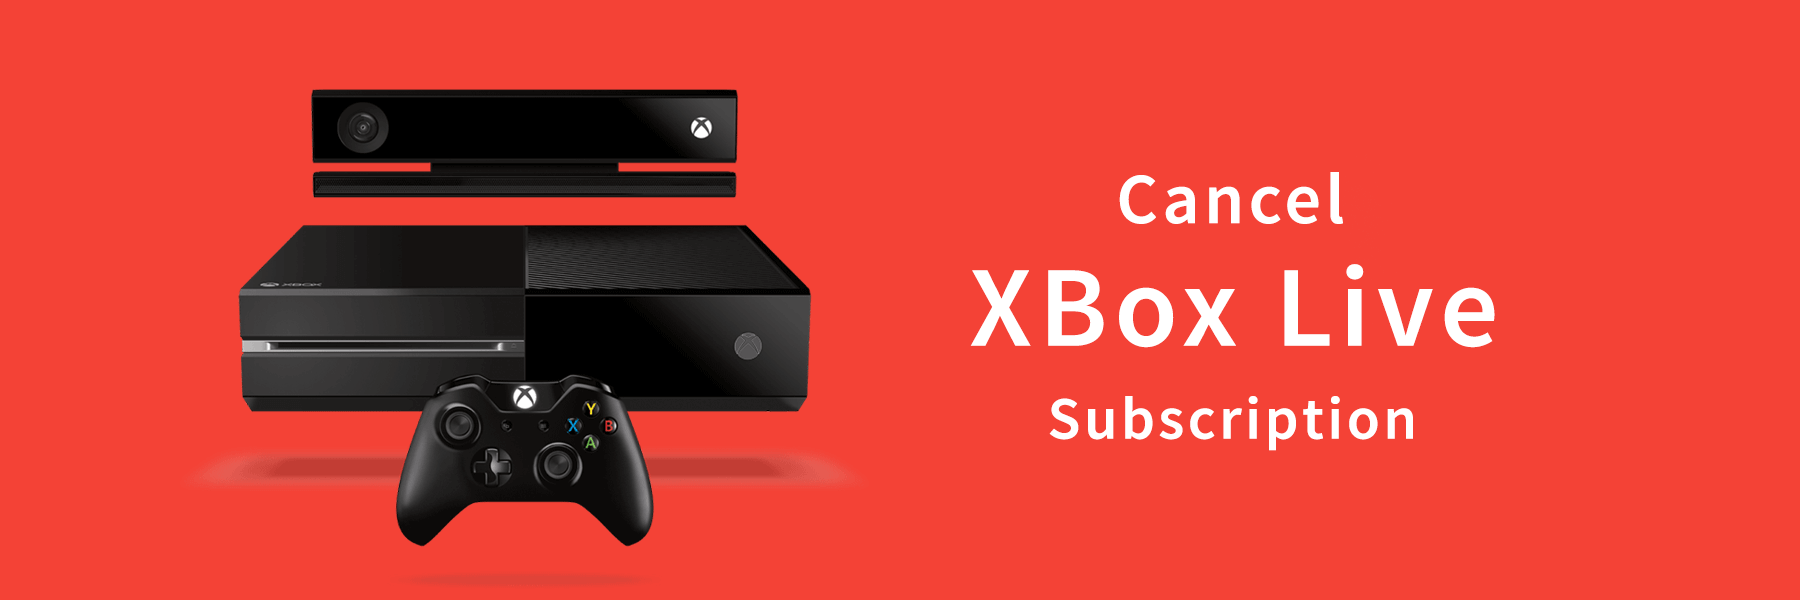 cancel-xbox-live-subscription